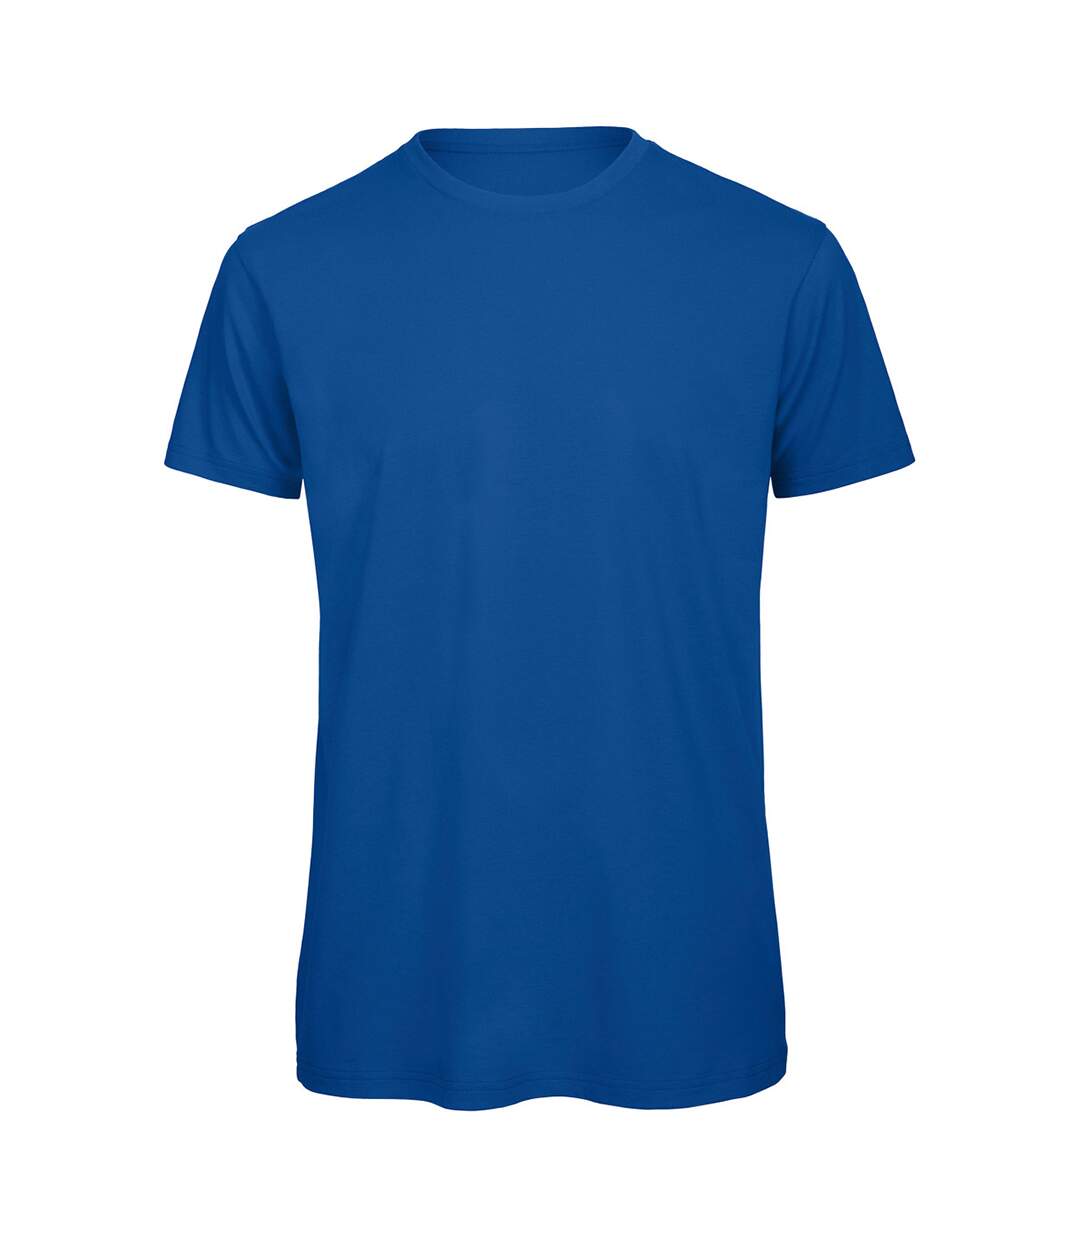 B&C Favourite - T-shirt en coton bio - Homme (Bleu roi) - UTBC3635